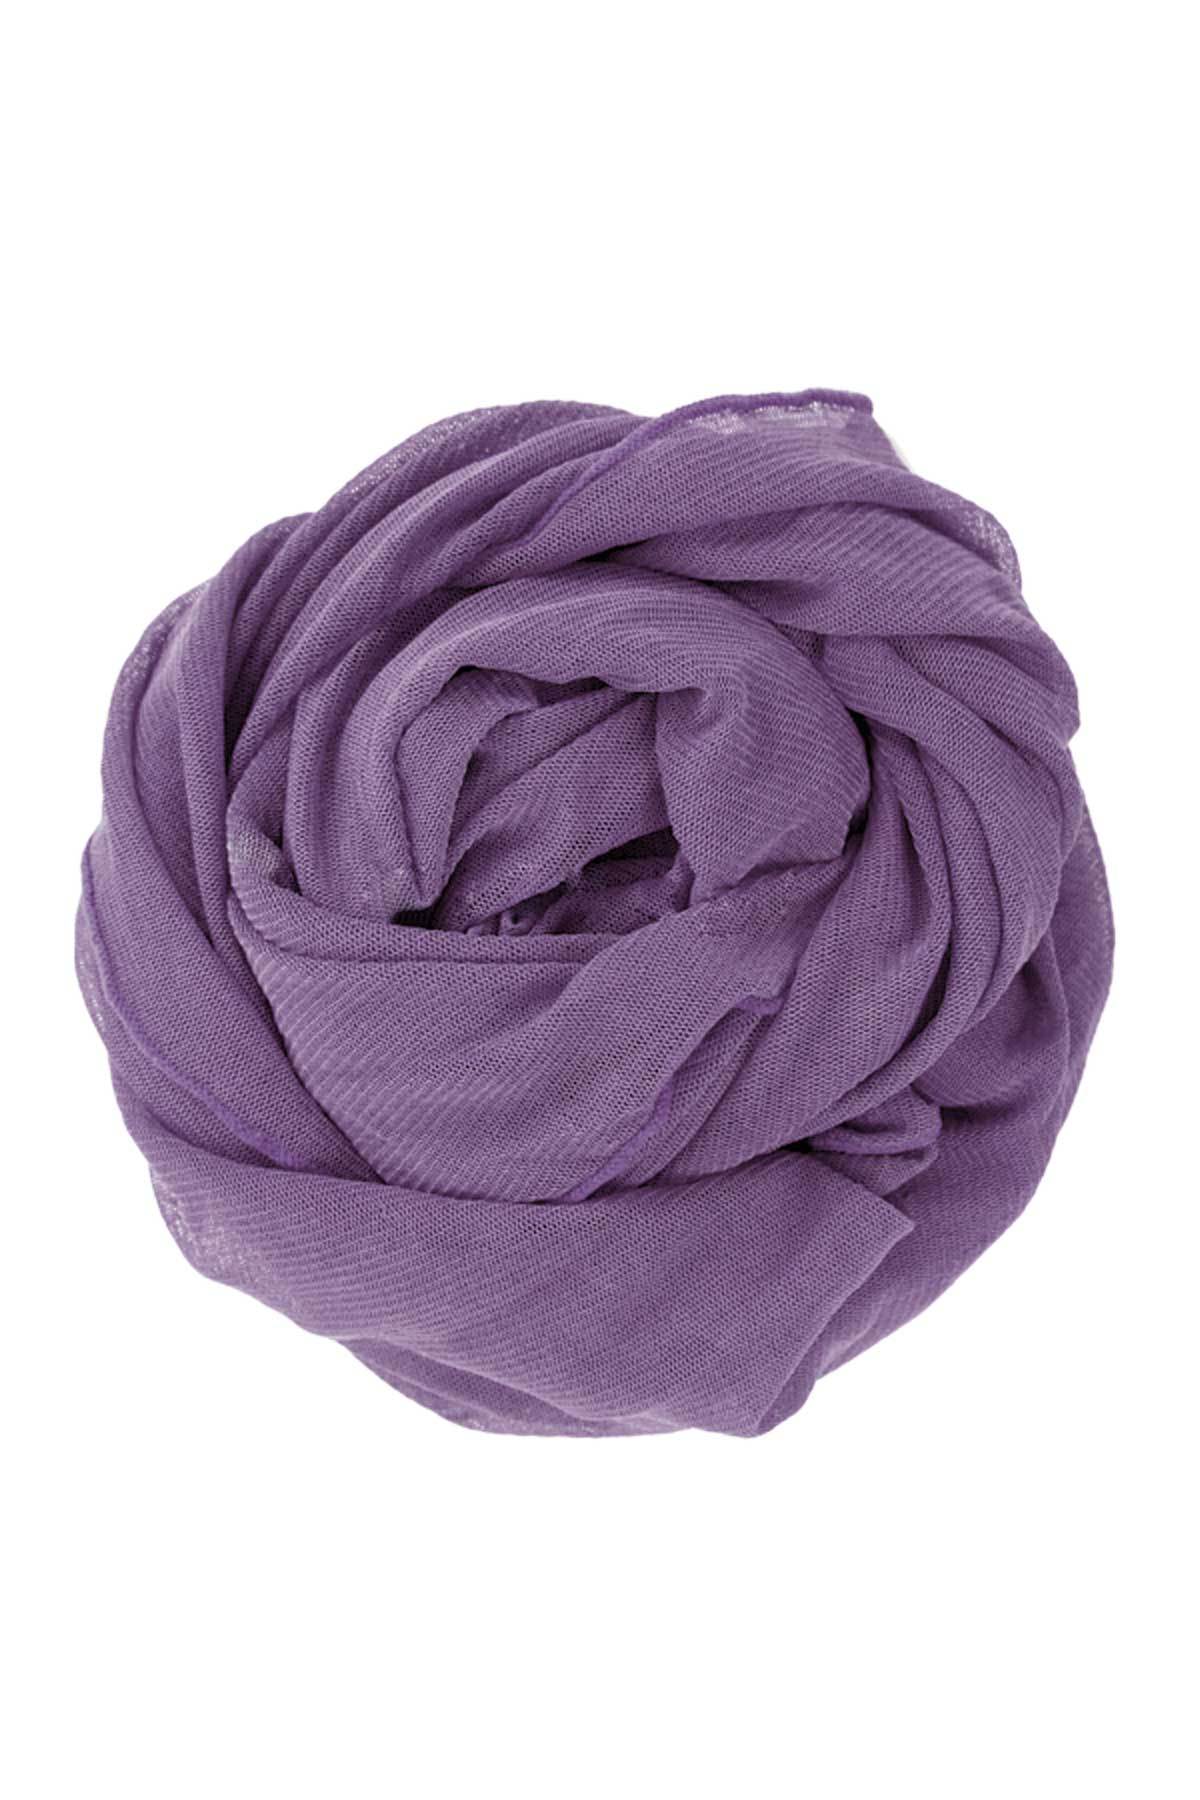 Thaikila Apparel & Accessories > Clothing > Dresses Purple / S/M Multi-Function Lavender Purple Naomi Pareo Mesh Sarong Dress Skirt Cover-Up by Thaikila